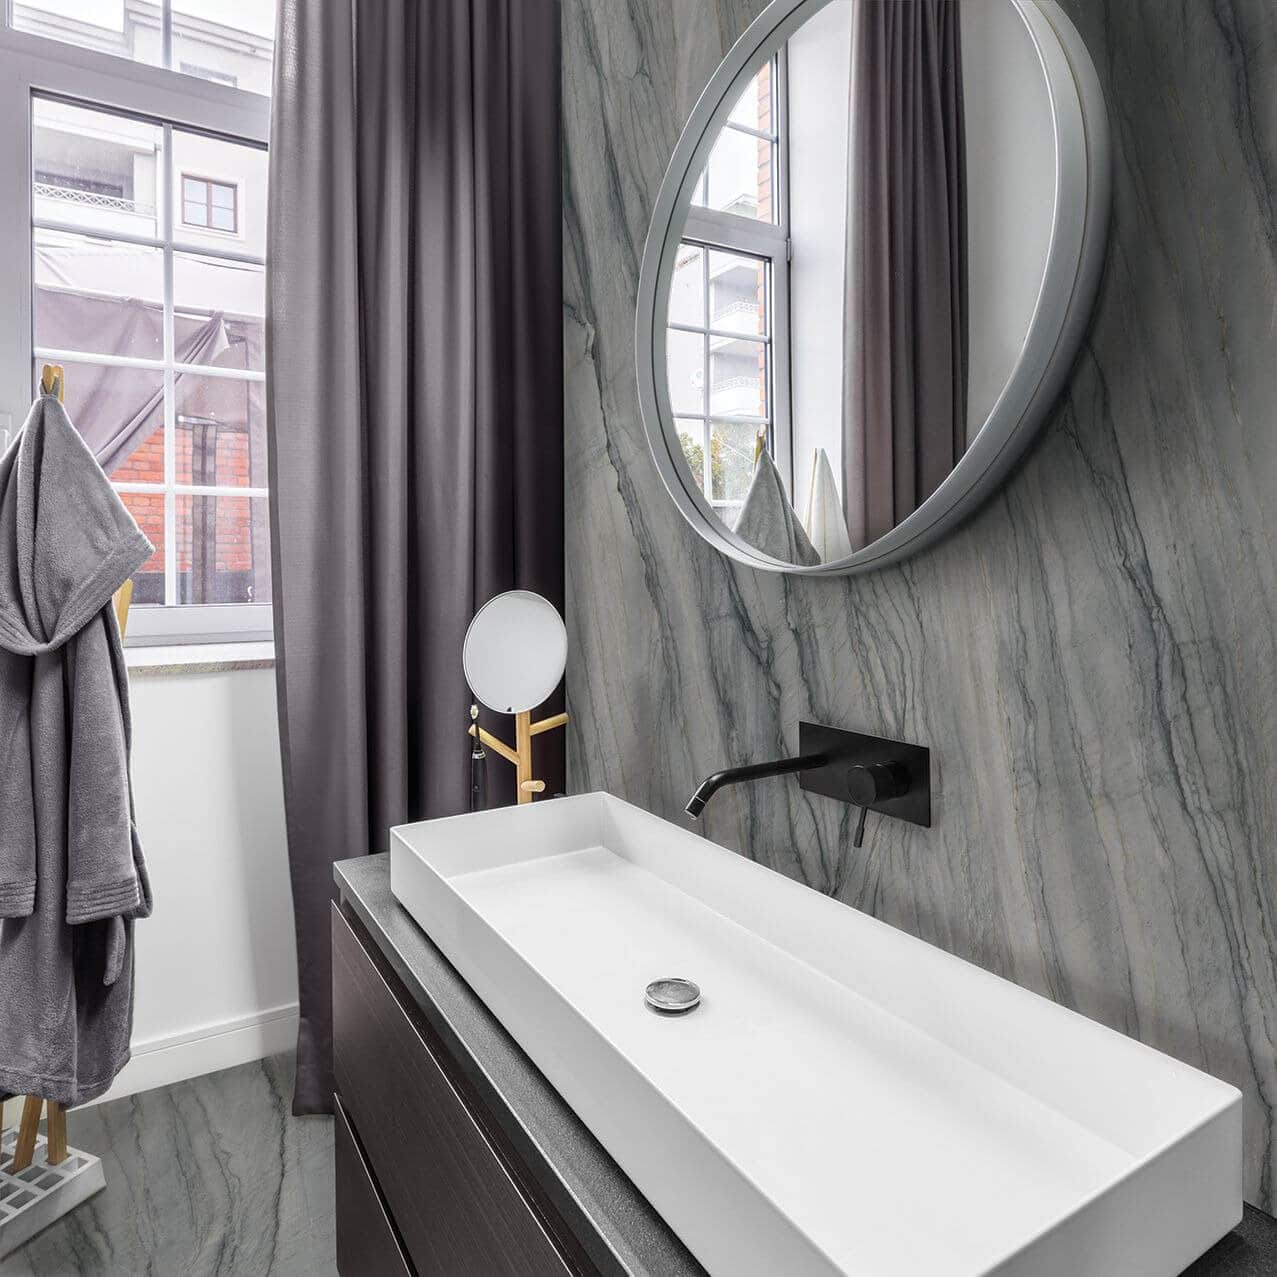 Luminous sink bathroom with gauged porcelain tile backsplash in a gray marble look
